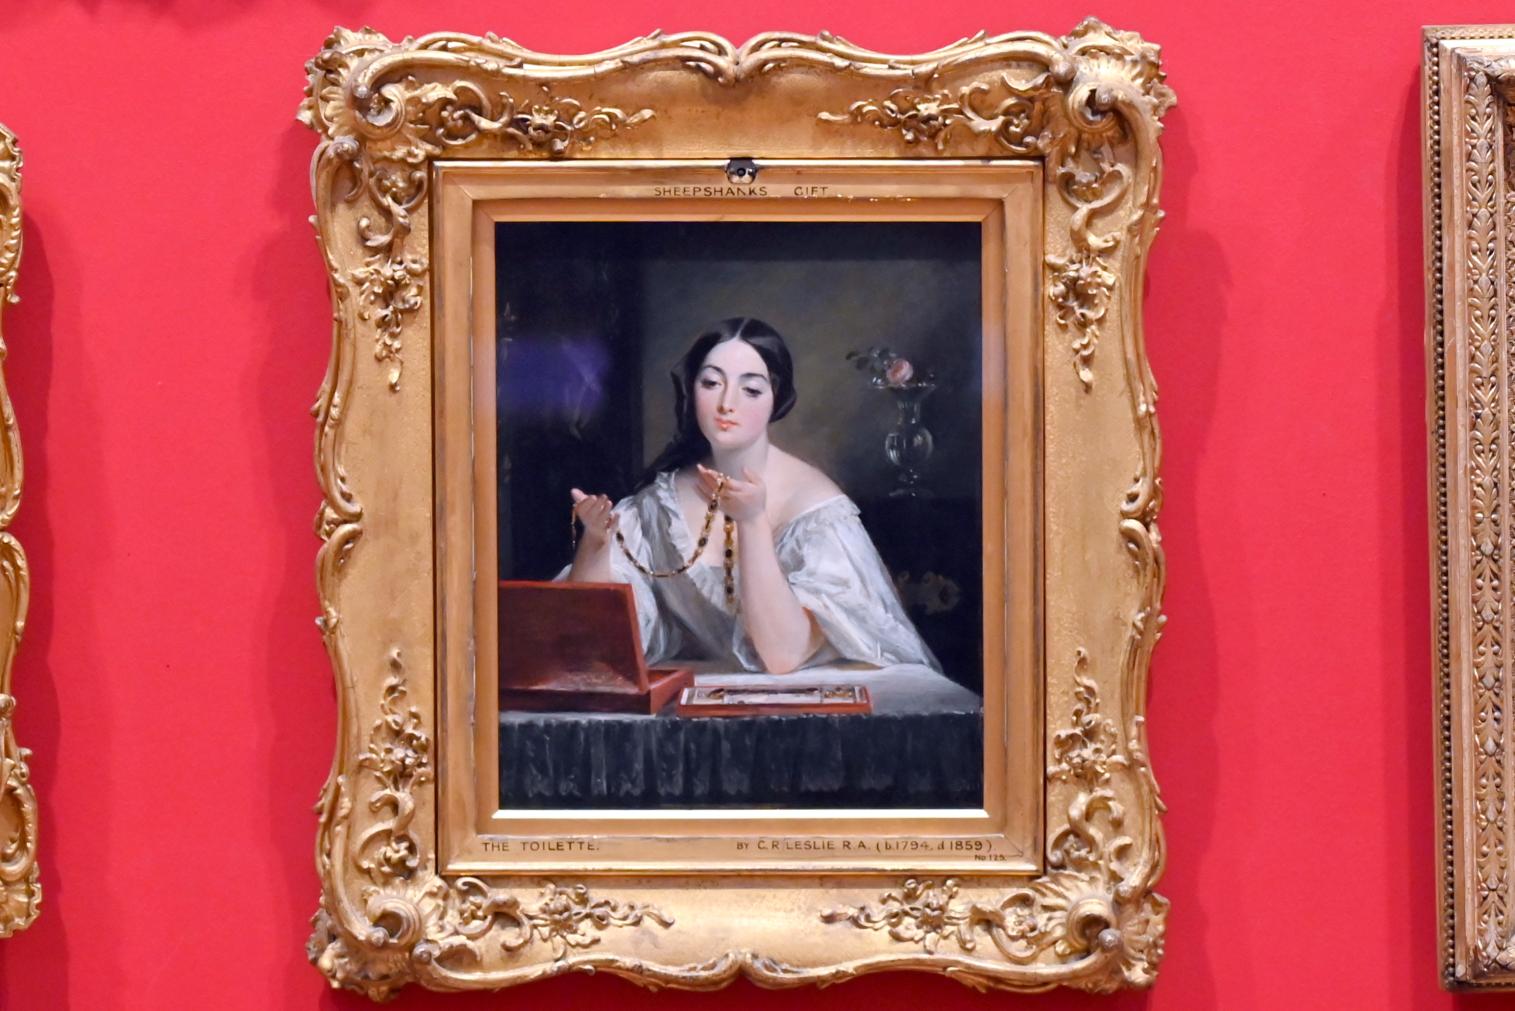 Charles Robert Leslie (1830–1849), Junge Dame bei der Toilette, London, Victoria and Albert Museum, 2. Etage, Paintings, 1849